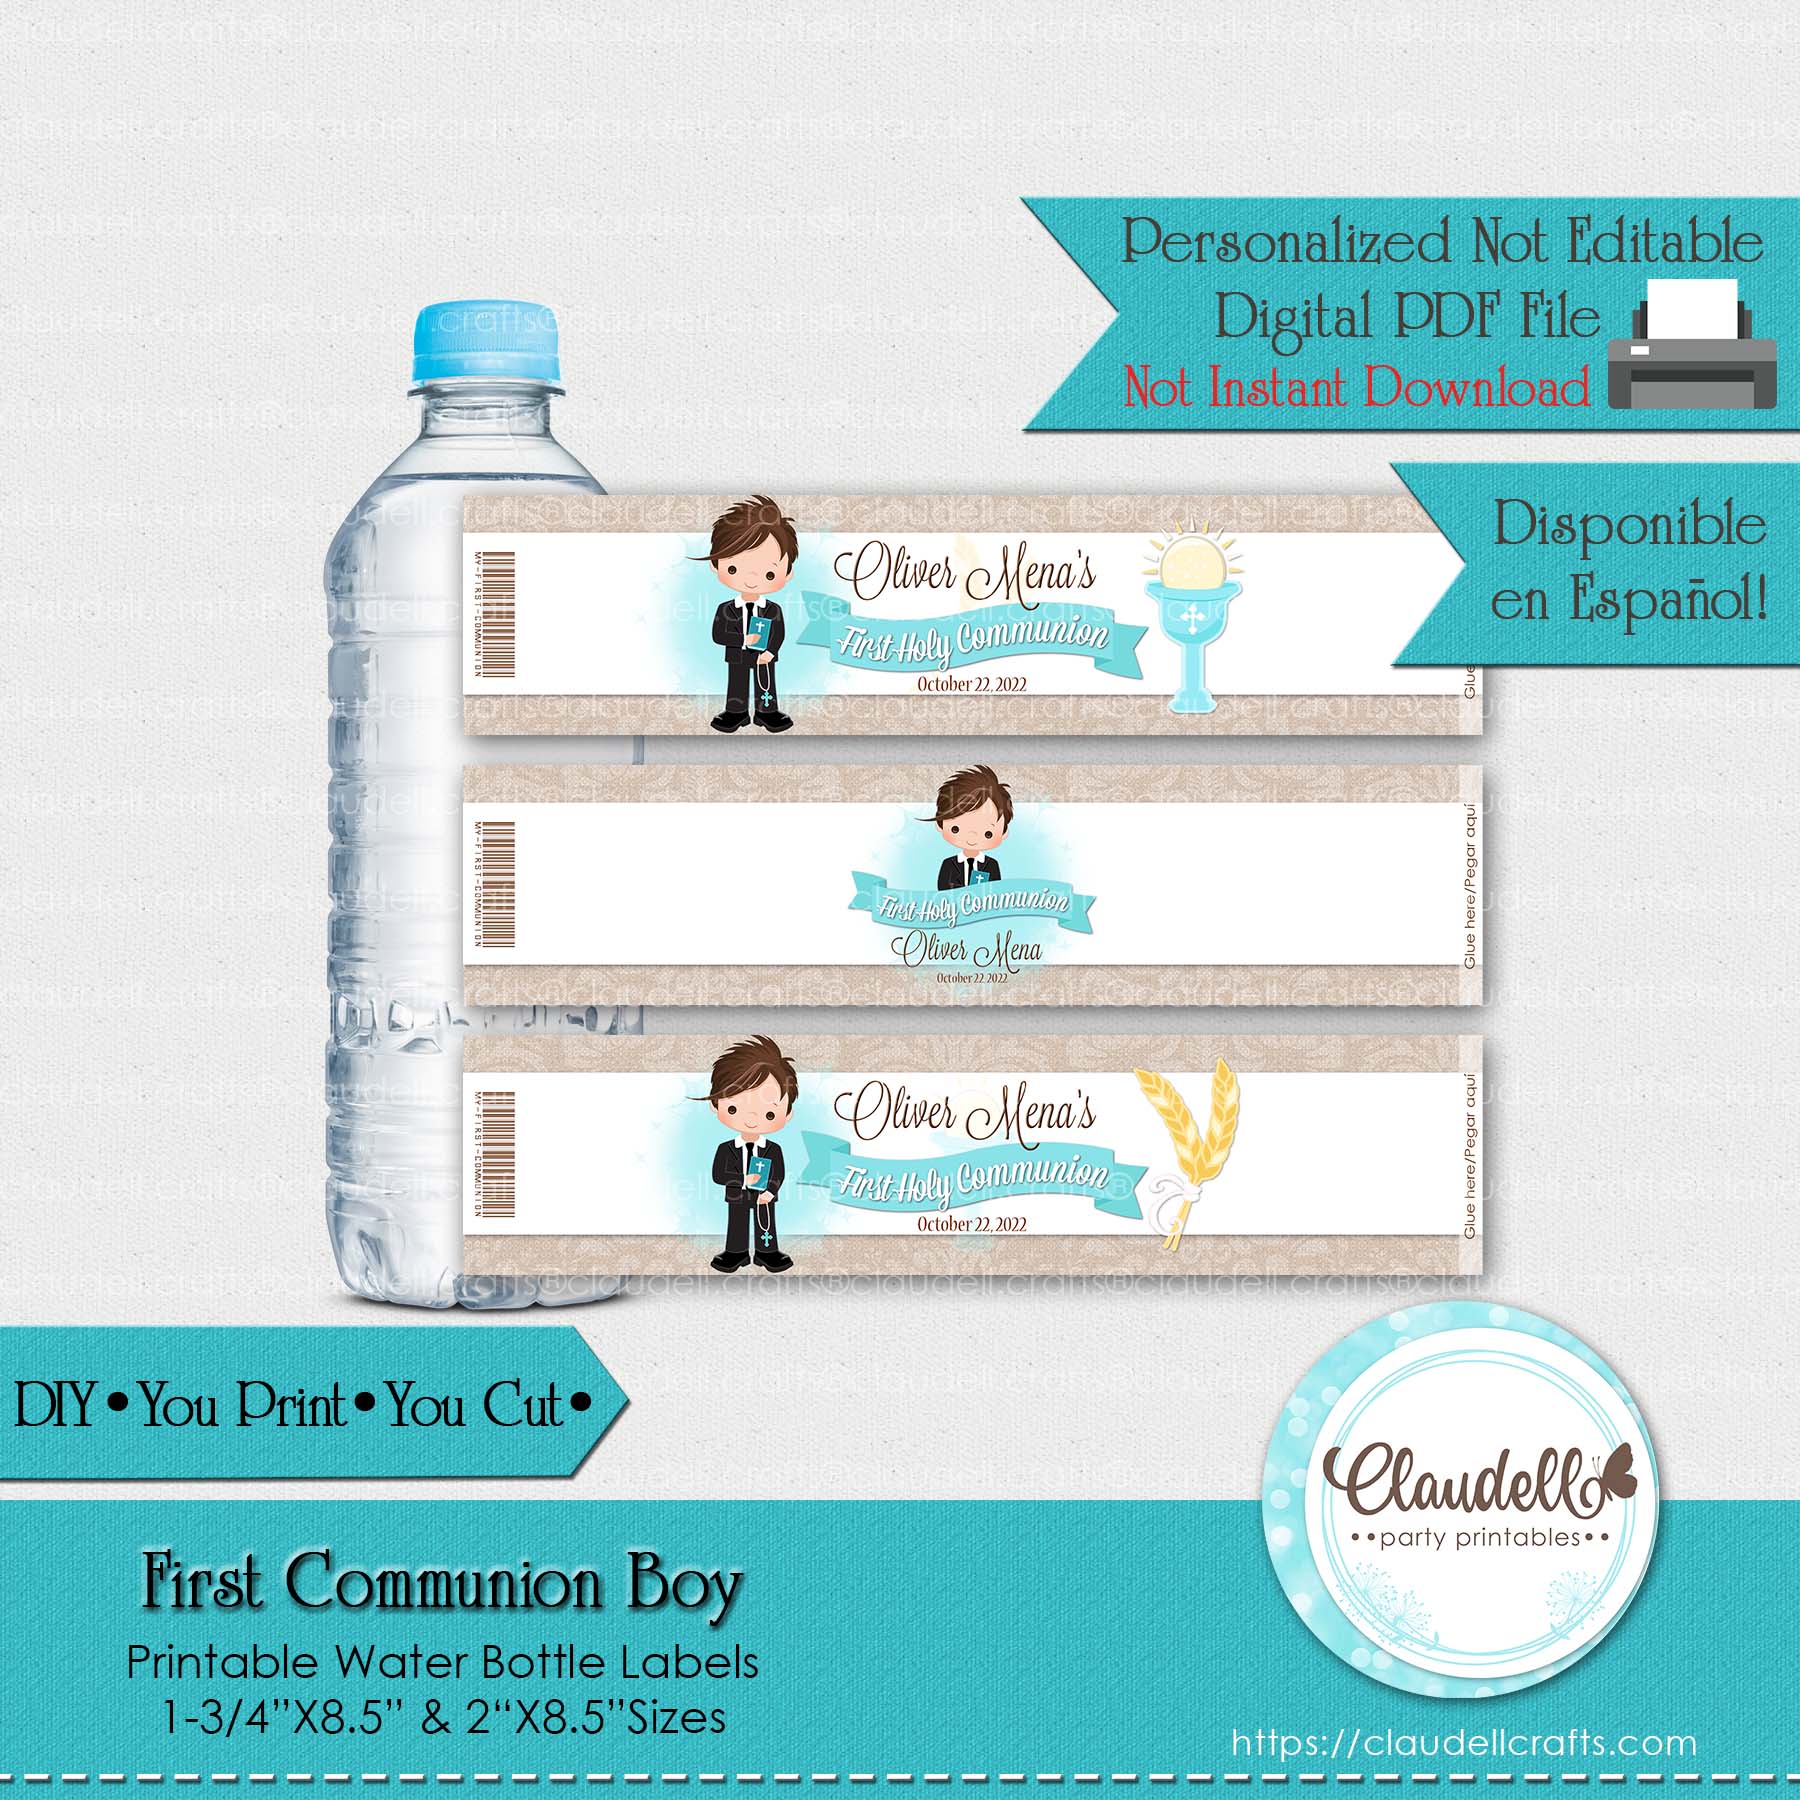 First Communion Boy Printable Water Bottle Labels, Etiqueta Comunión Niño, Communion Personalized Labels, Event Favors/Digital File Only